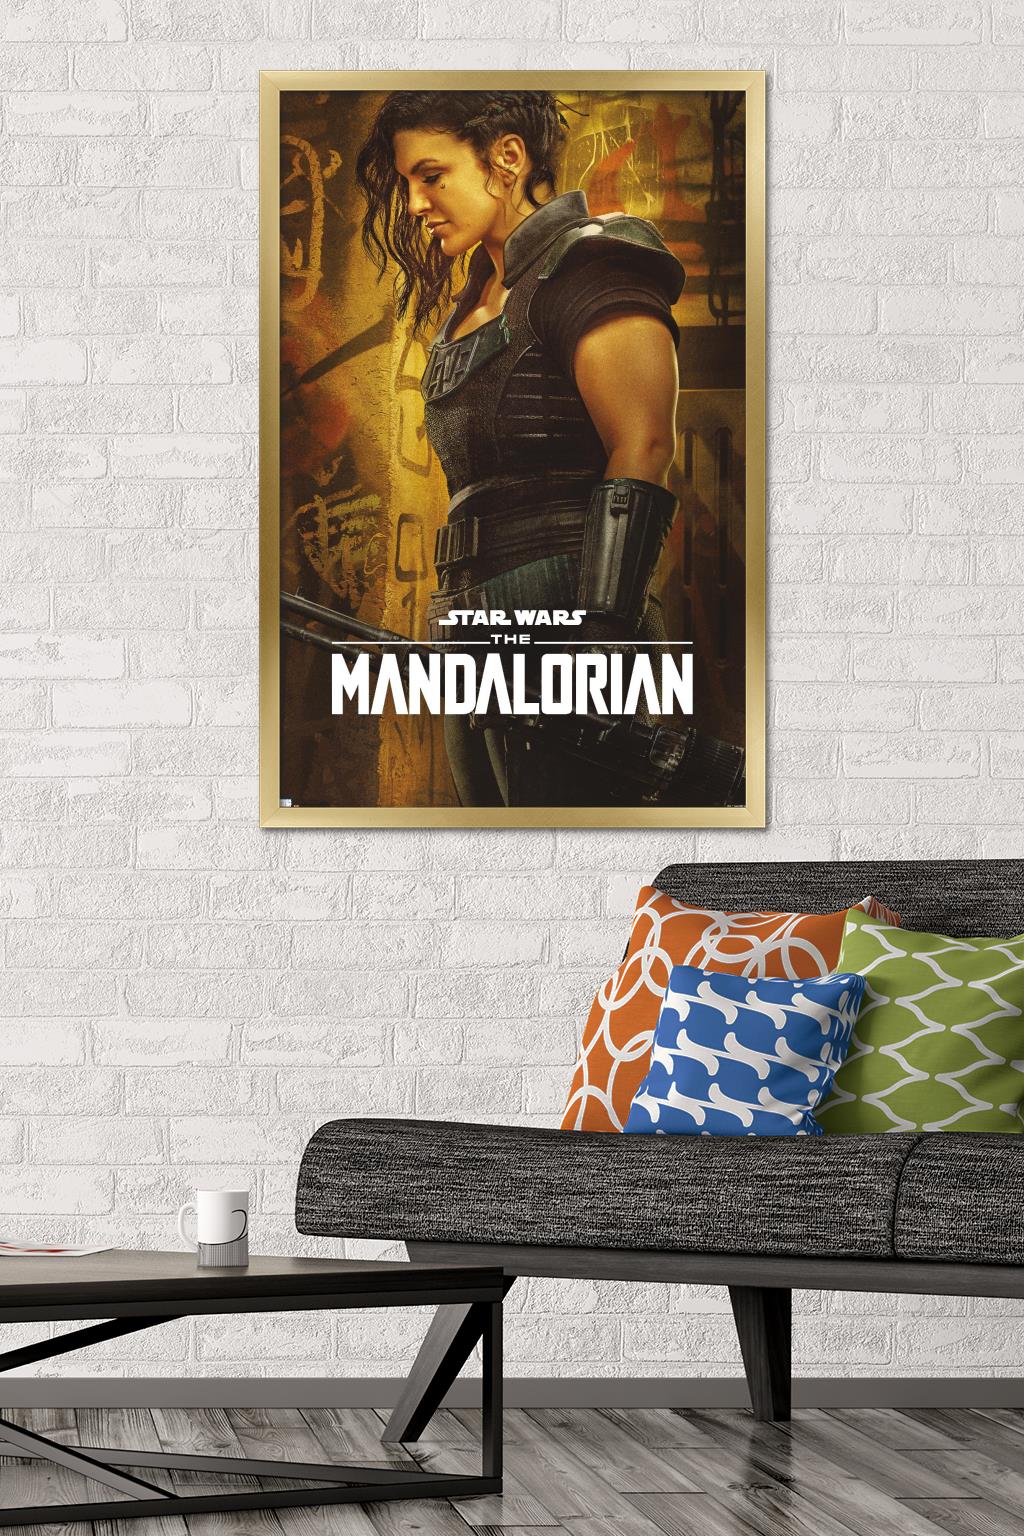 Star Wars: The Mandalorian Season 2 - Cara Dune Wall Poster, 22.375" x 34", Framed - image 2 of 5